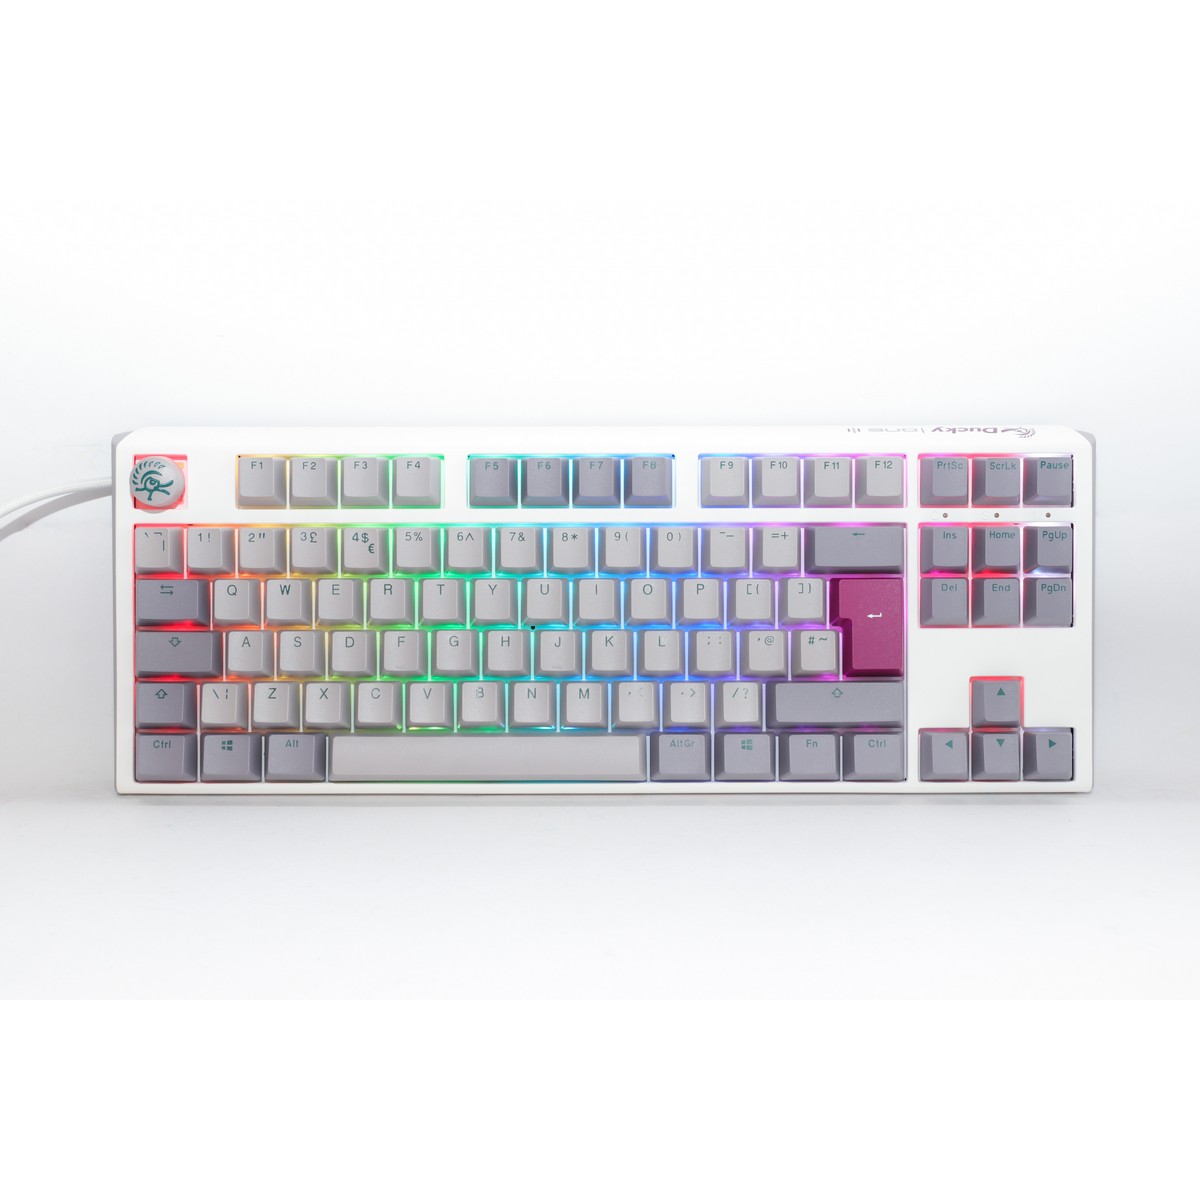 Ducky One 3 Mist TKL 80% USB RGB Mechanical Gaming Keyboard Cherry MX Silent Red Switch - UK Layout